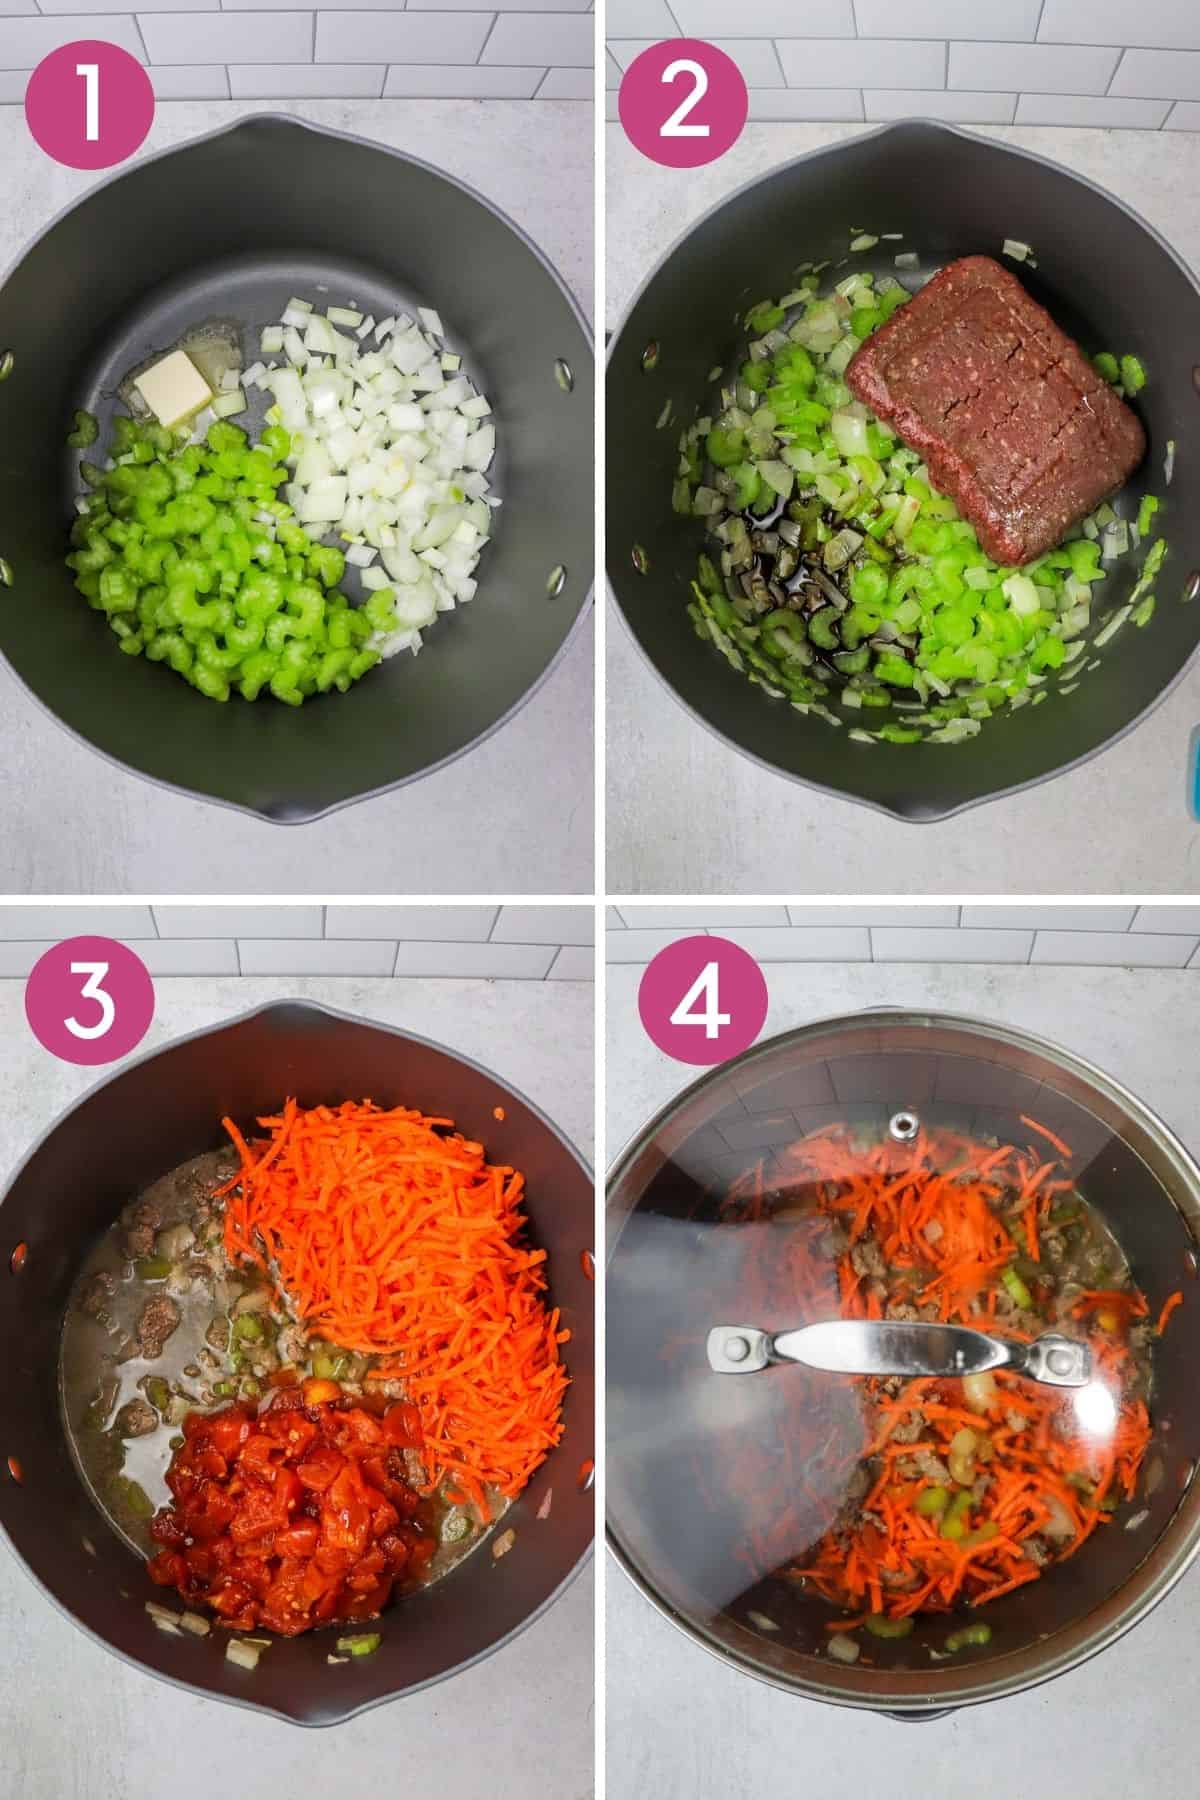 How to make cheesy hamburger soup.